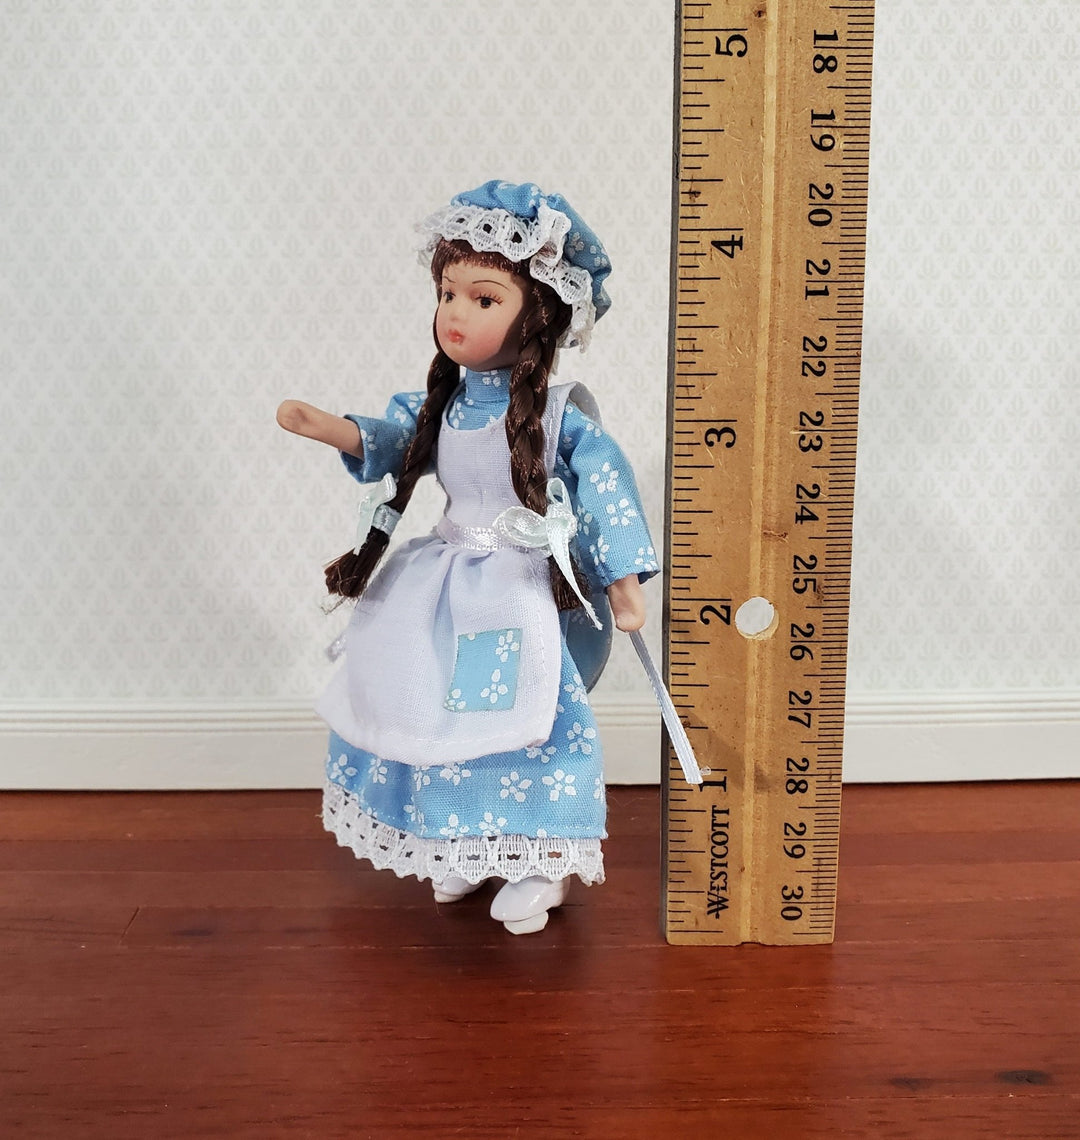 Dollhouse Girl Doll Long Hair Brown Braids Porcelain Poseable 1:12 Scale Miniature - Miniature Crush